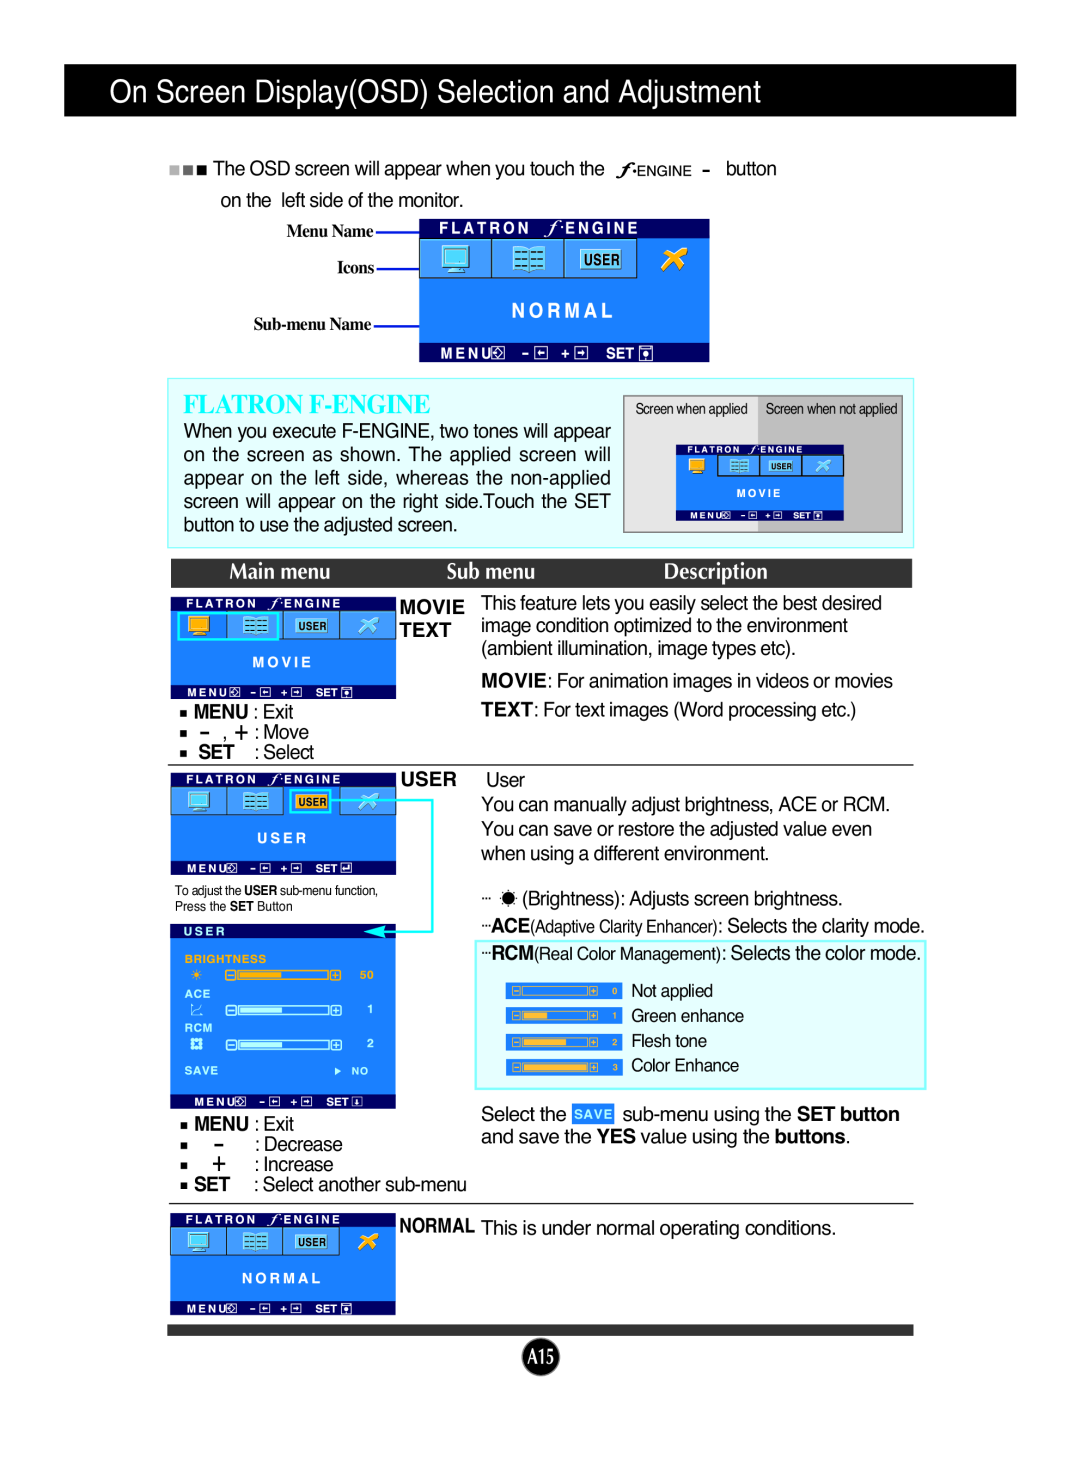 LG Electronics L227WT On Screen DisplayOSD Selection and Adjustment, Flatron F-Engine, Main menu, Sub menu, Description 